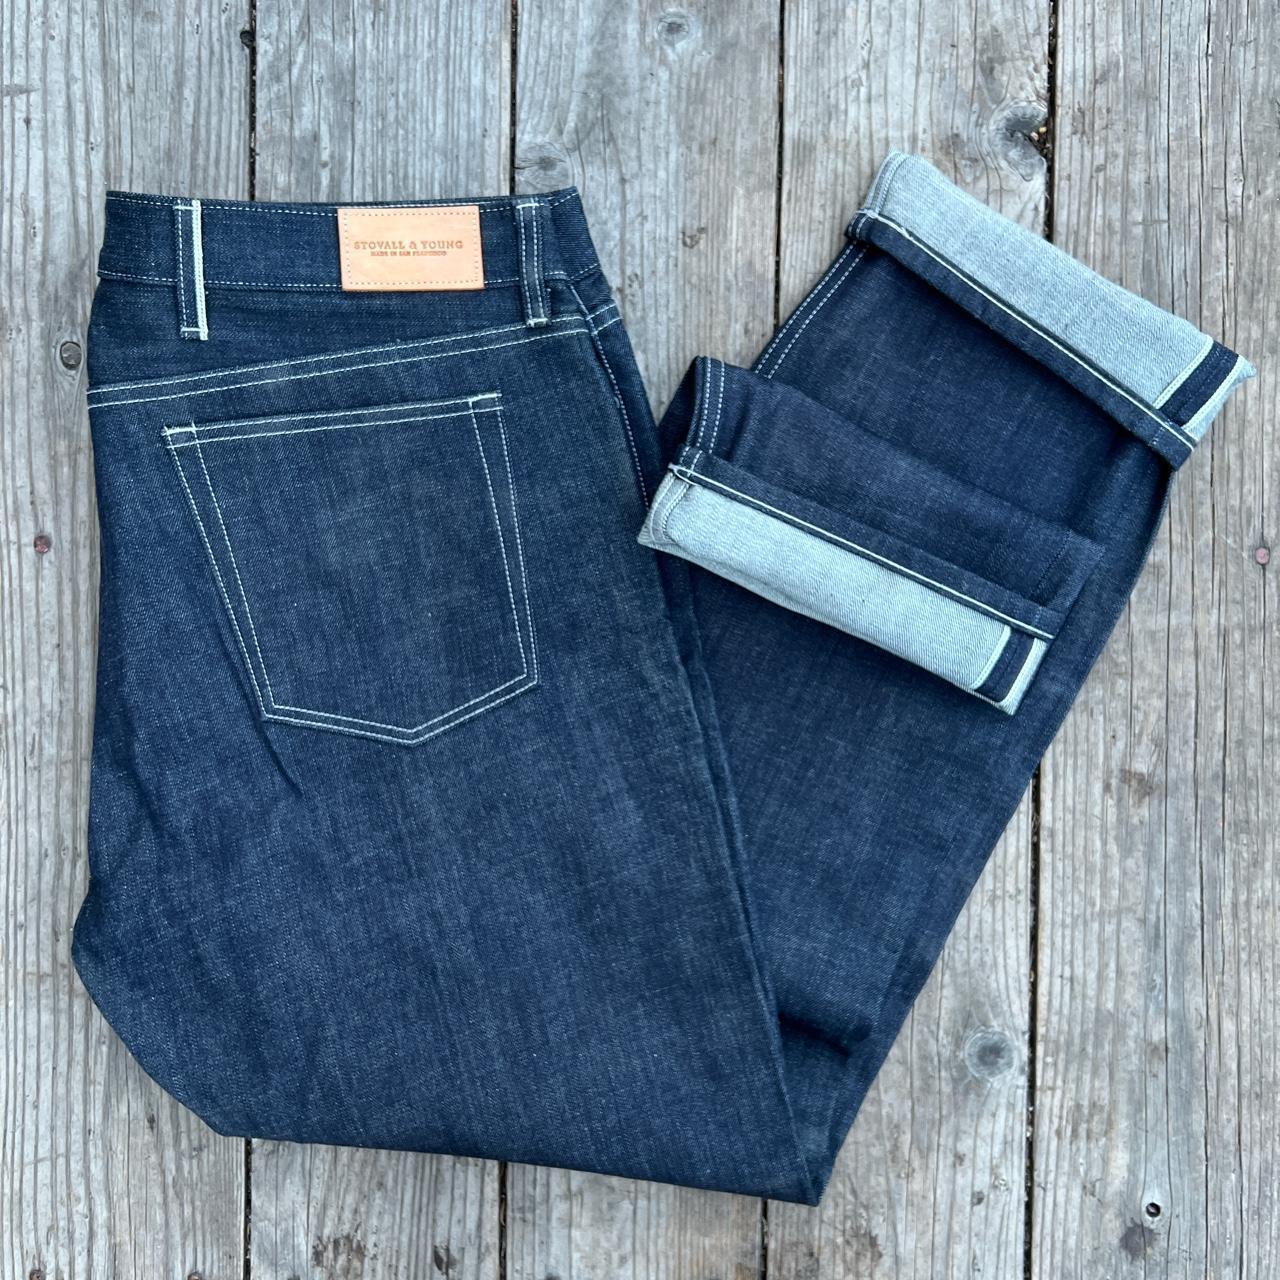 Japanese Selvedge Denim Jeans Brand New! Classic... - Depop